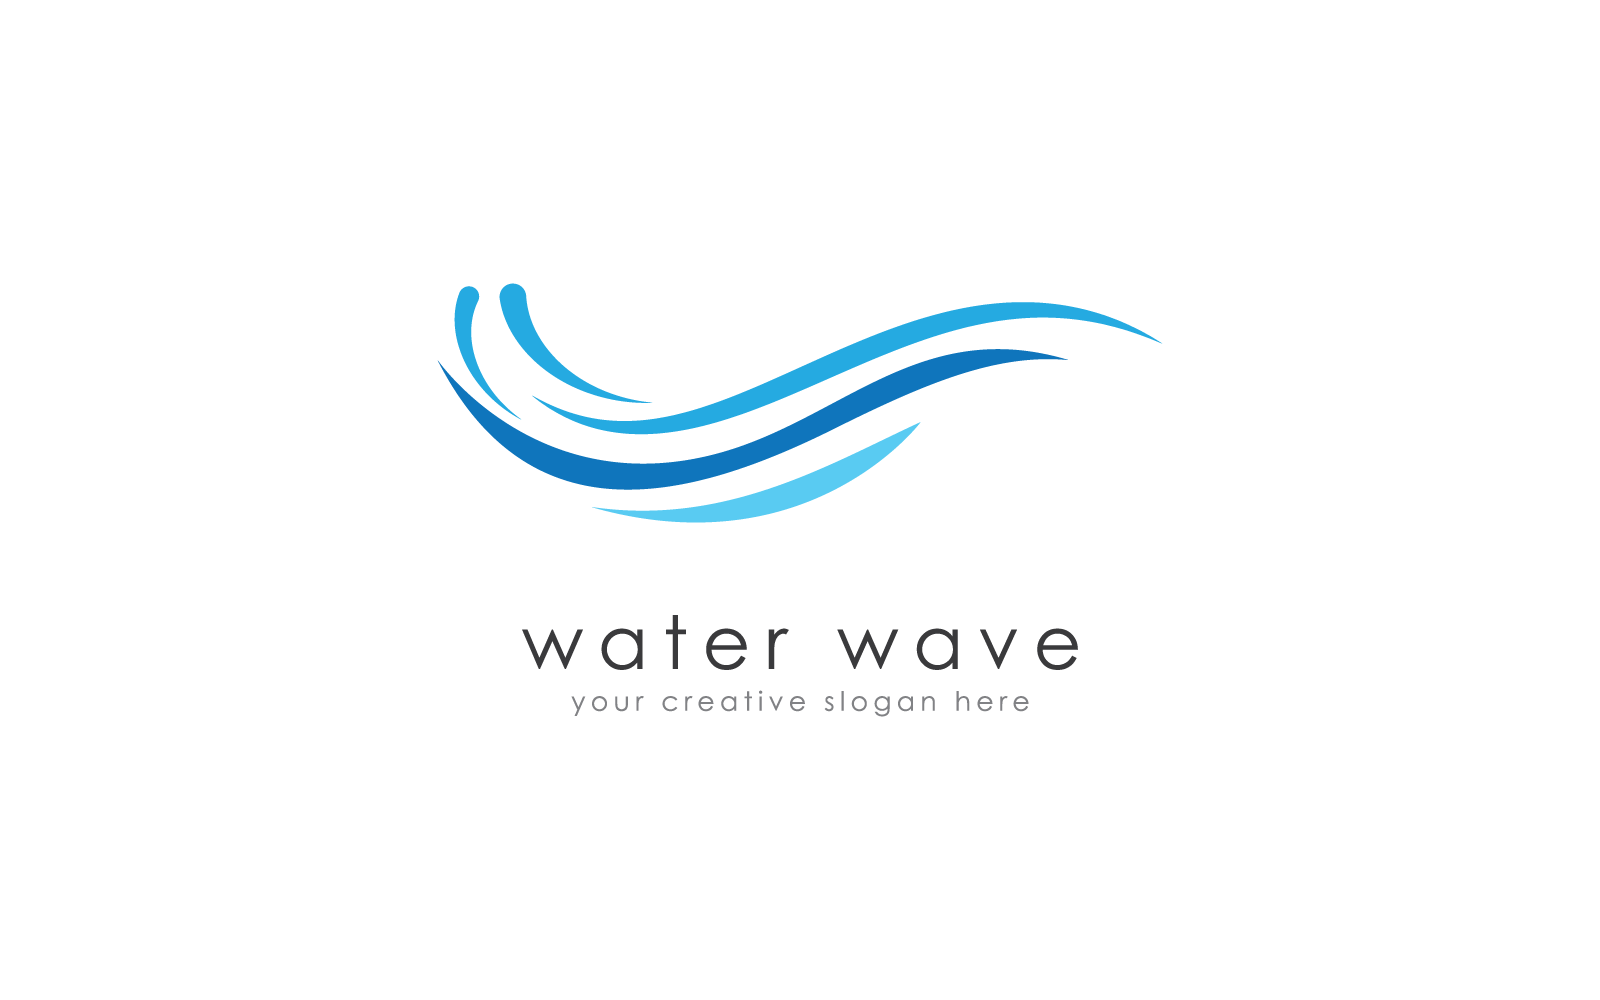 Water Wave flat design illustration logo template vector